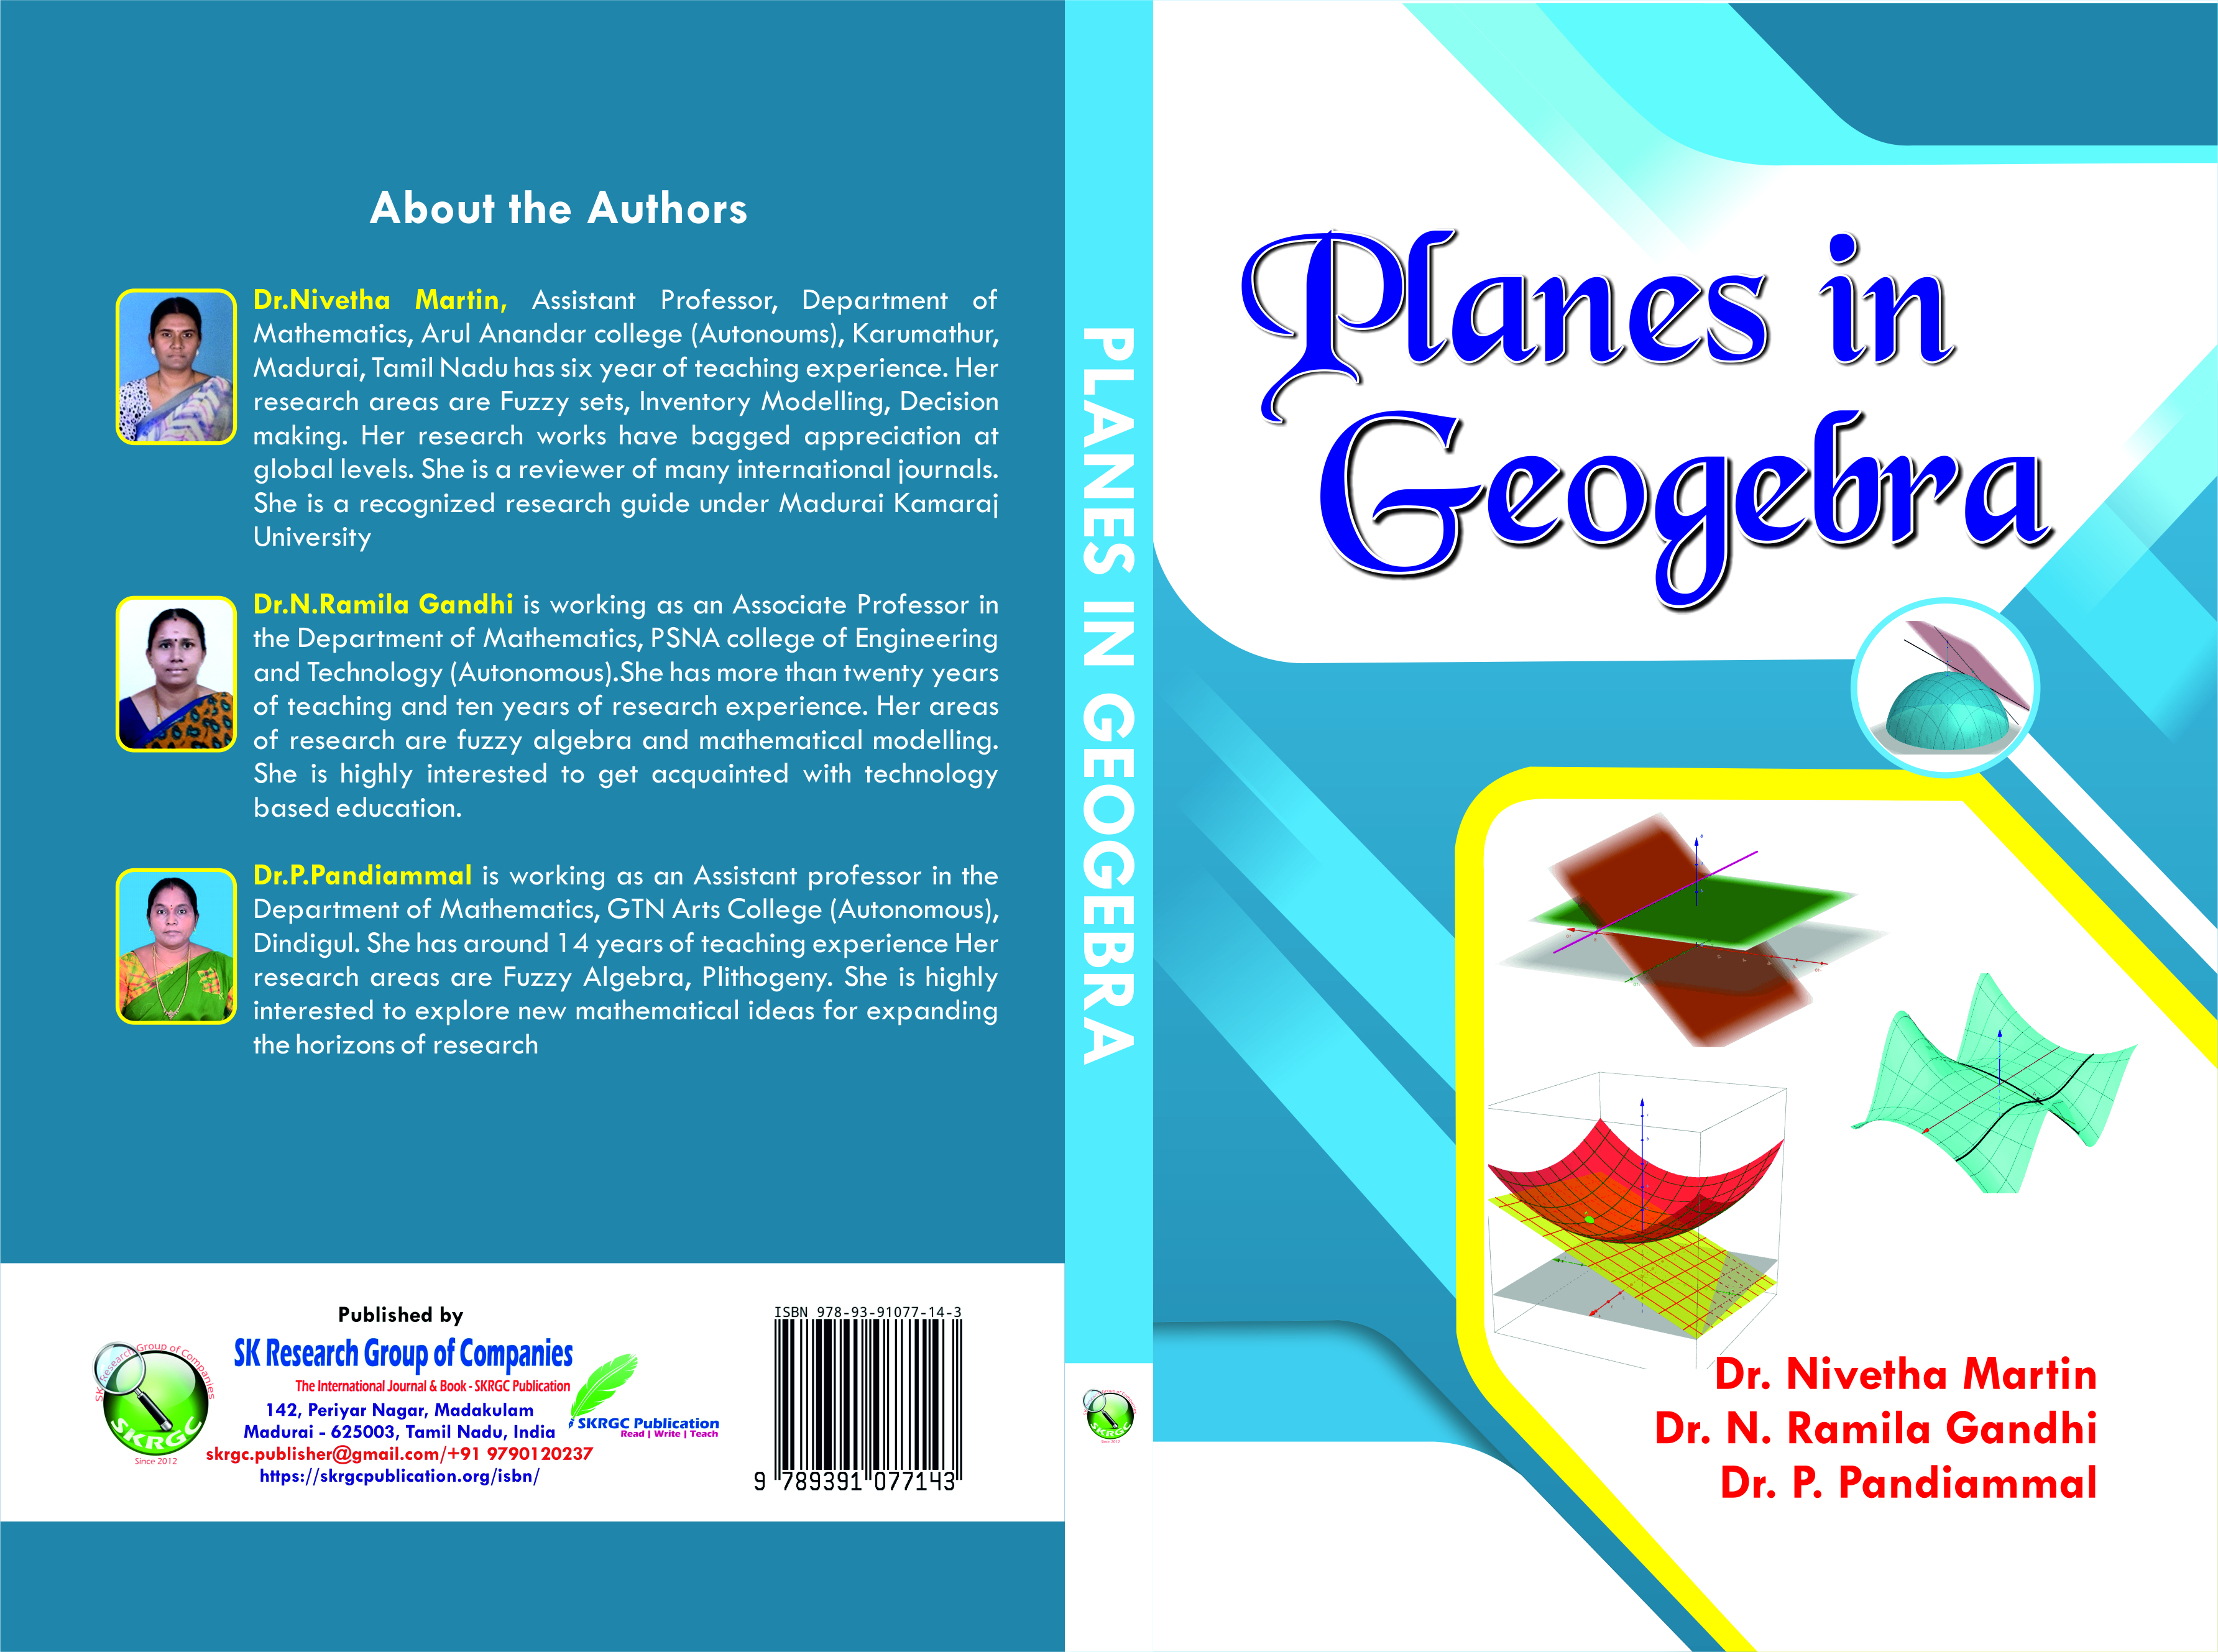 PLANES IN GEOGEBRA